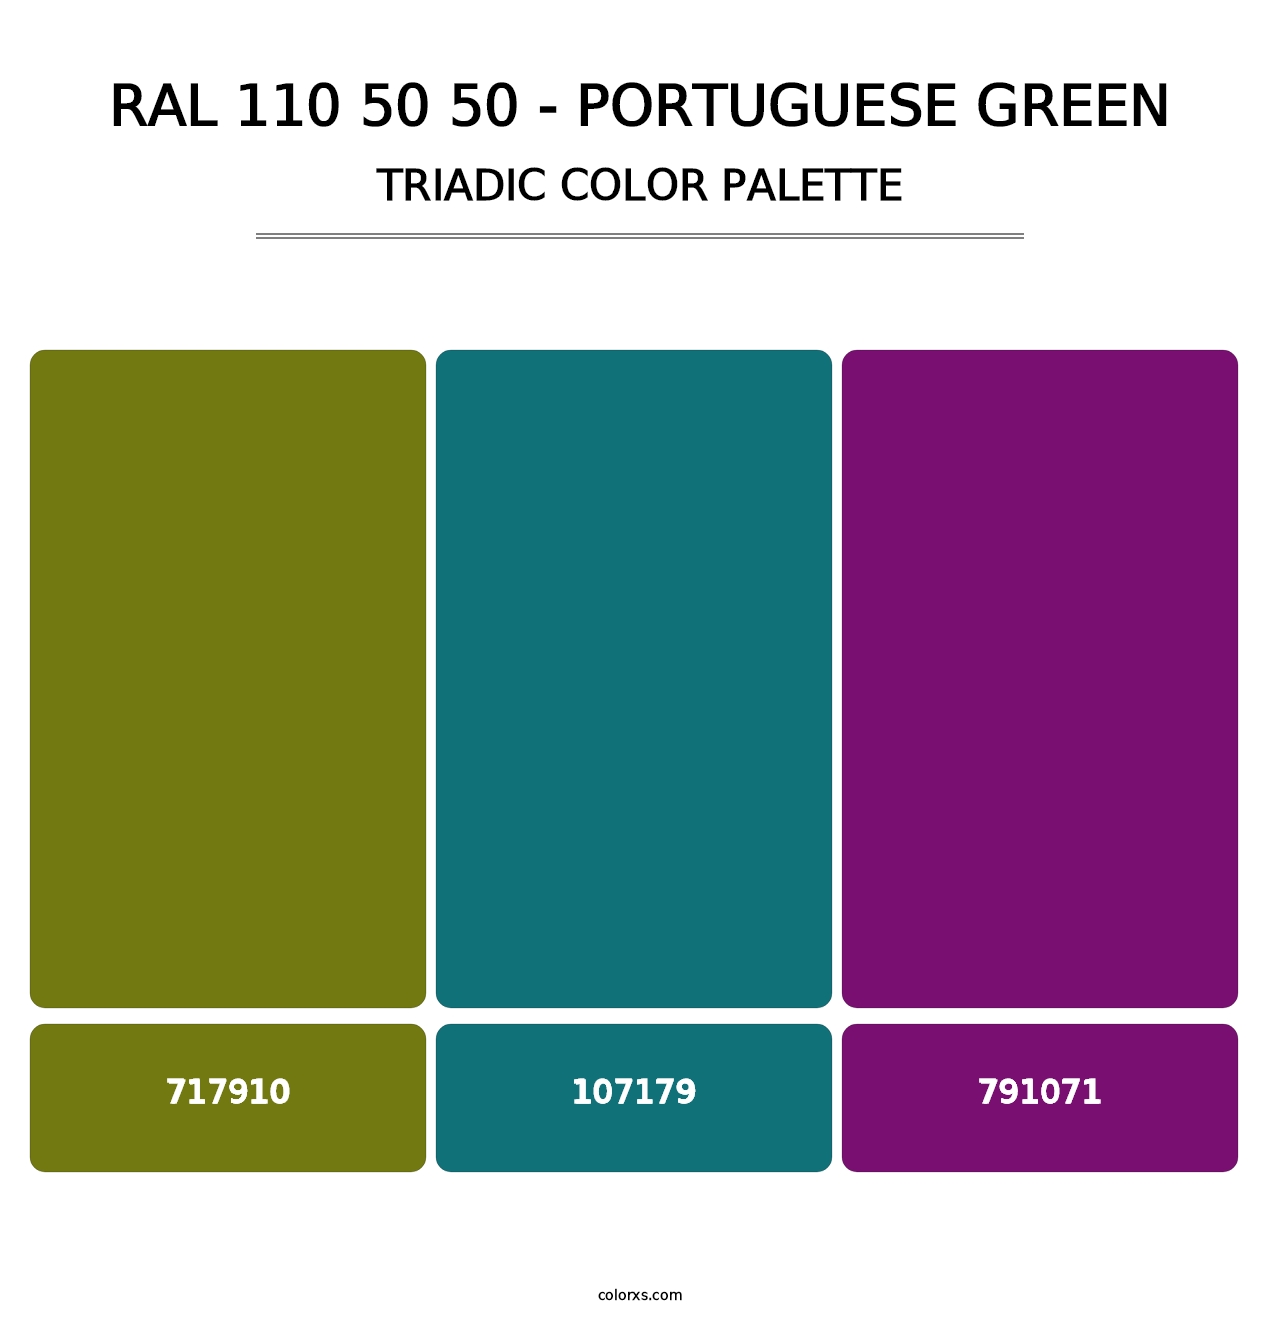 RAL 110 50 50 - Portuguese Green - Triadic Color Palette